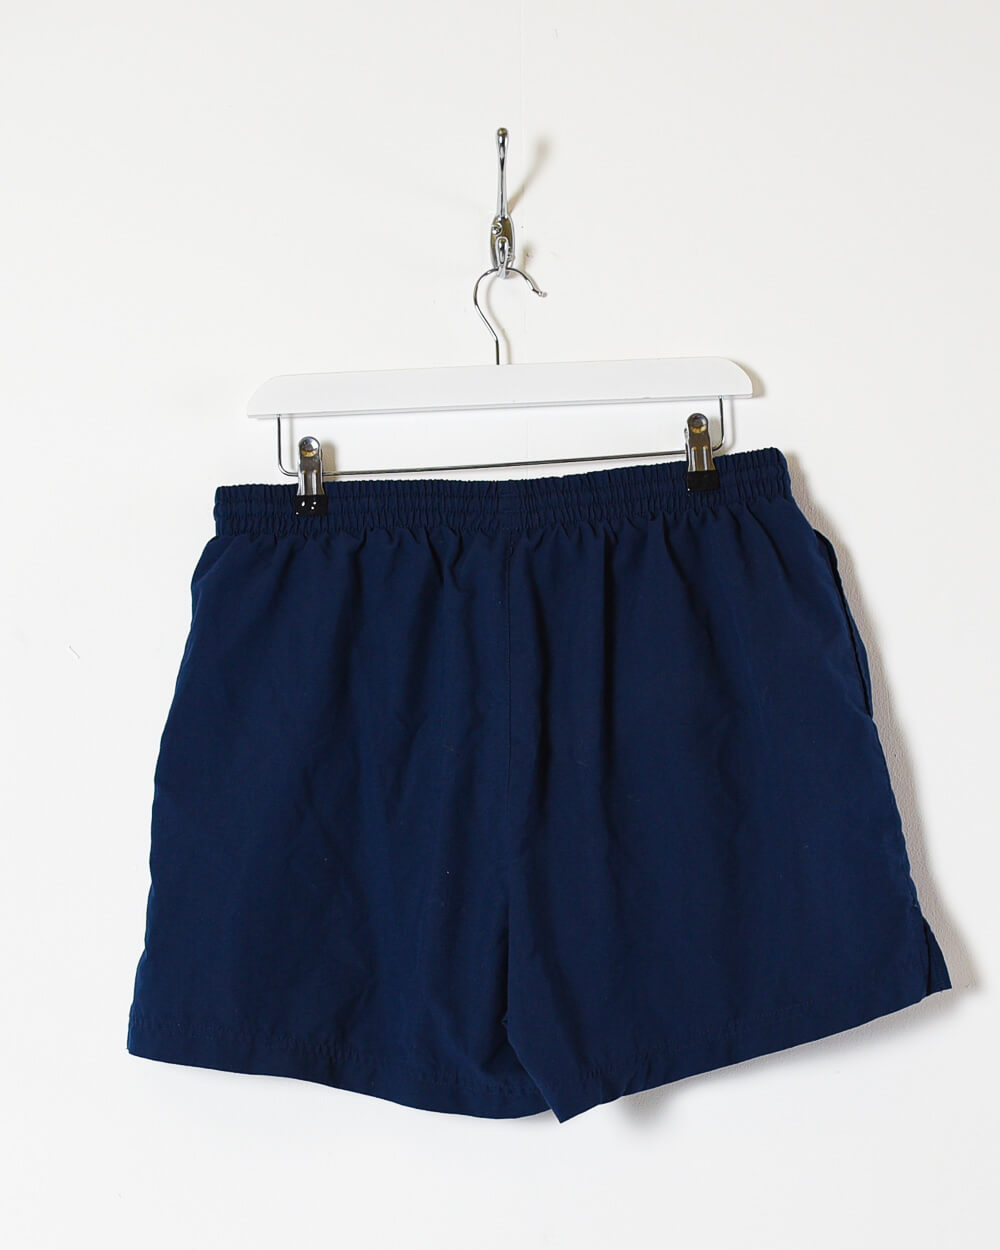 Navy Adidas Shorts - W34